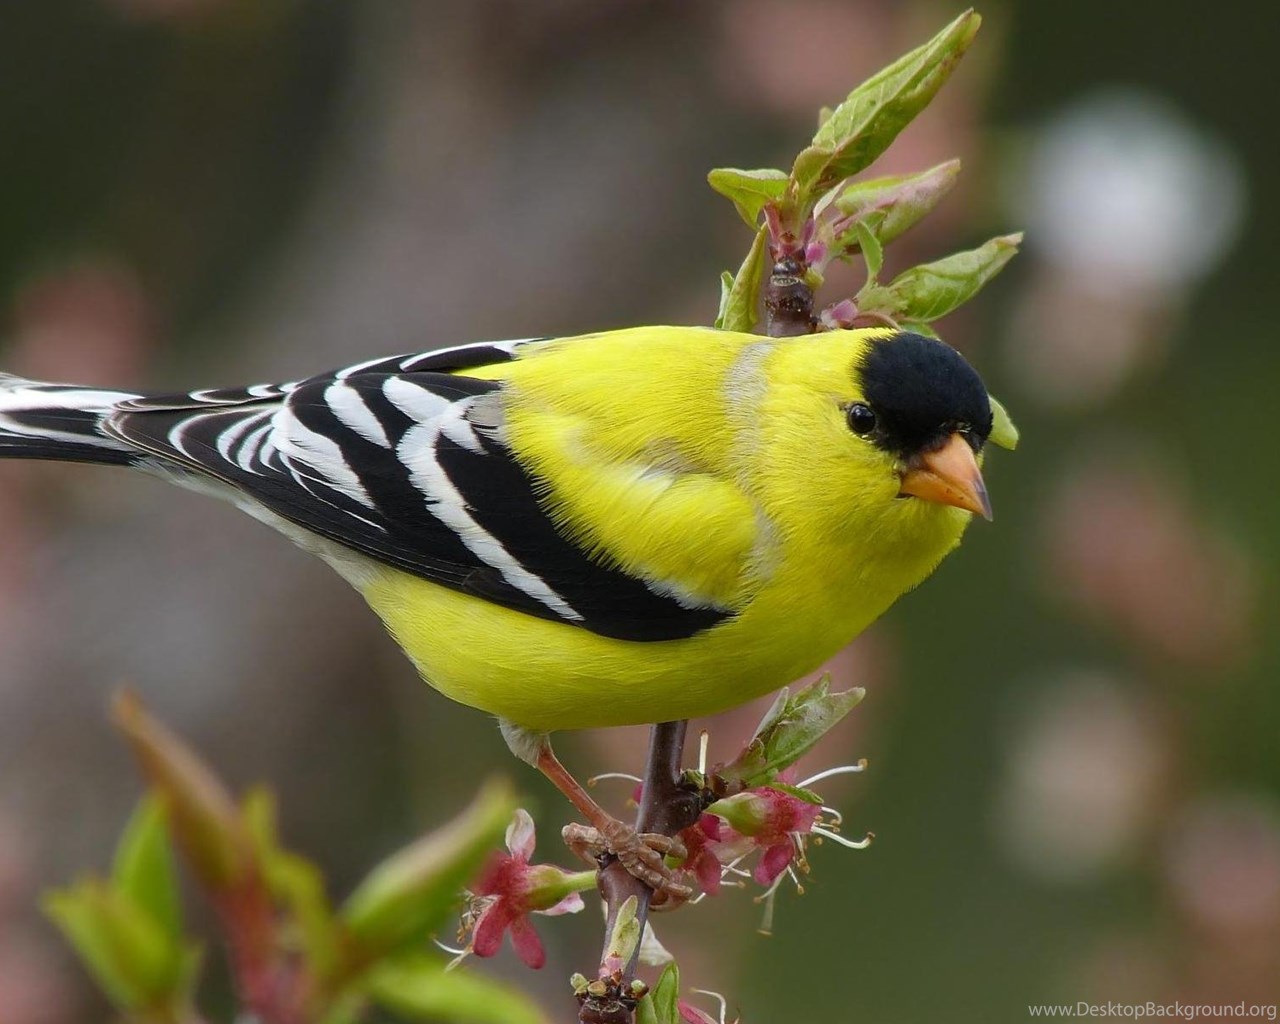 Птица с желтыми полосками на крыльях. American Goldfinch птица. Маленькая птица с желтыми крыльями. Чиж птица.